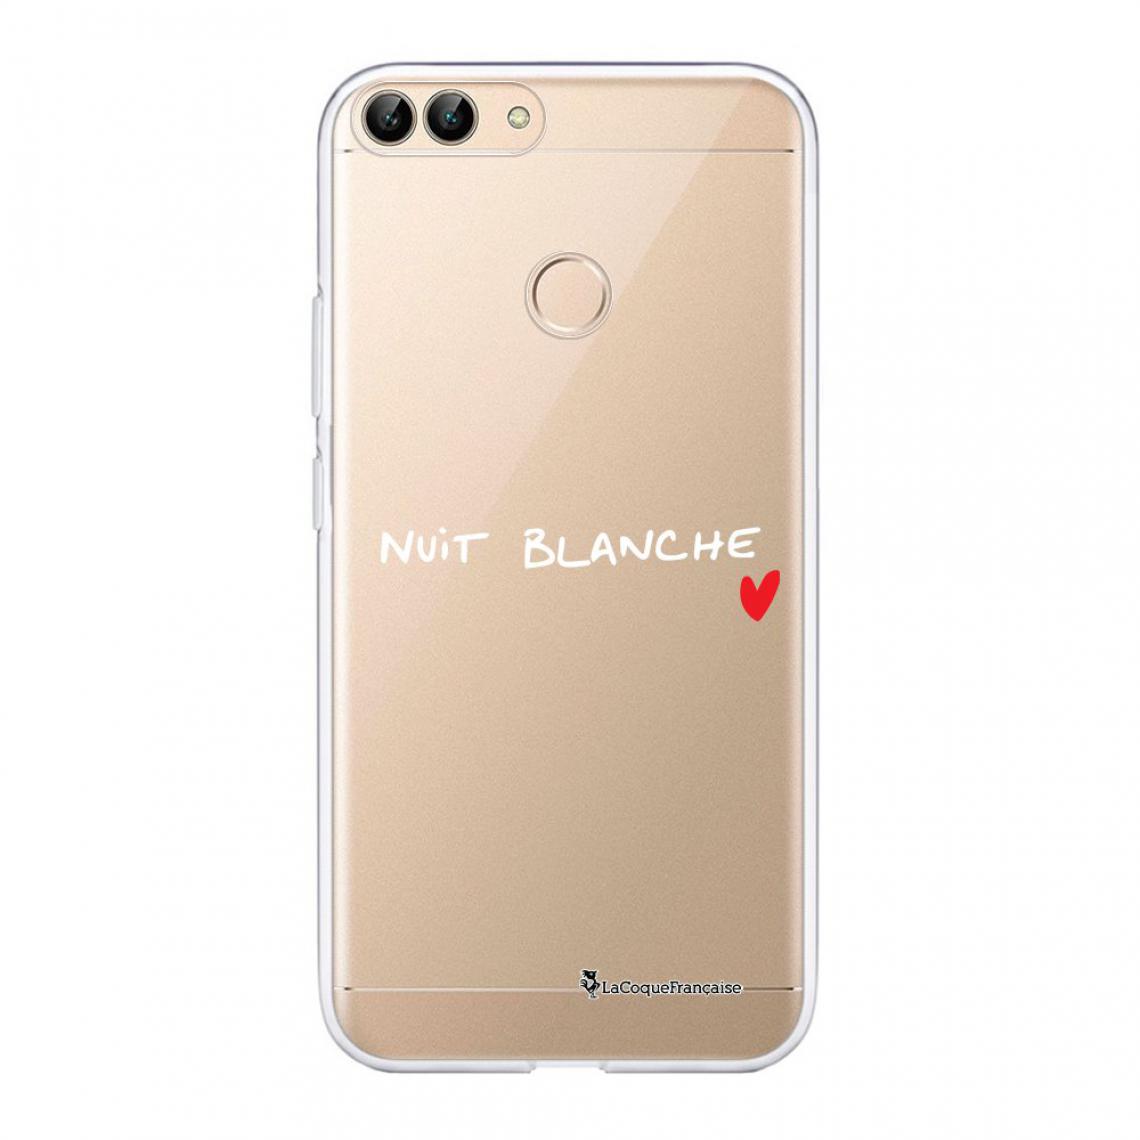 La Coque Francaise - Coque Huawei P Smart 2018 souple silicone transparente - Coque, étui smartphone